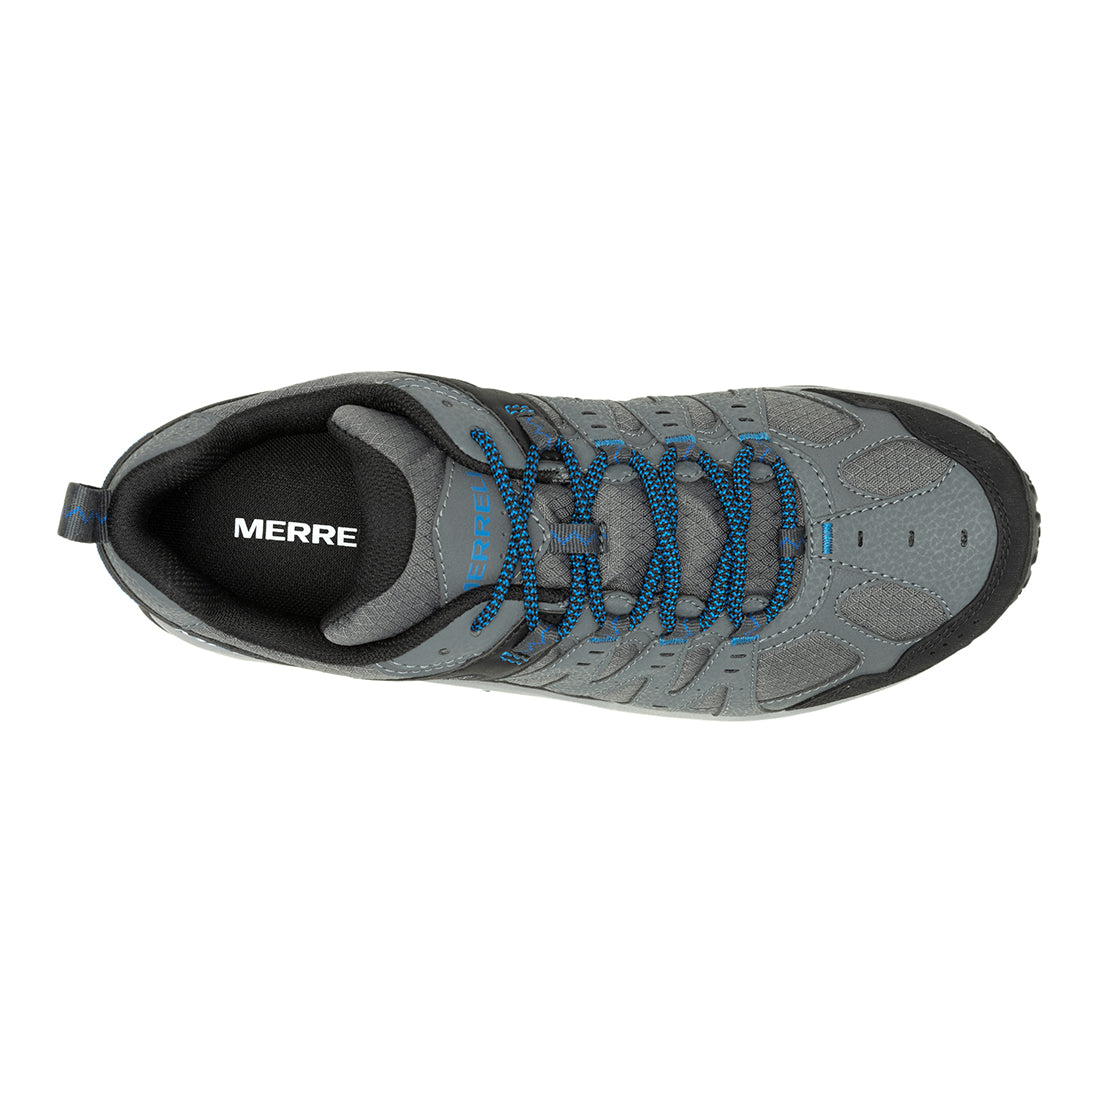 Accentor 3 Sport Gtx - Rock/Blue Mens Hiking Shoes